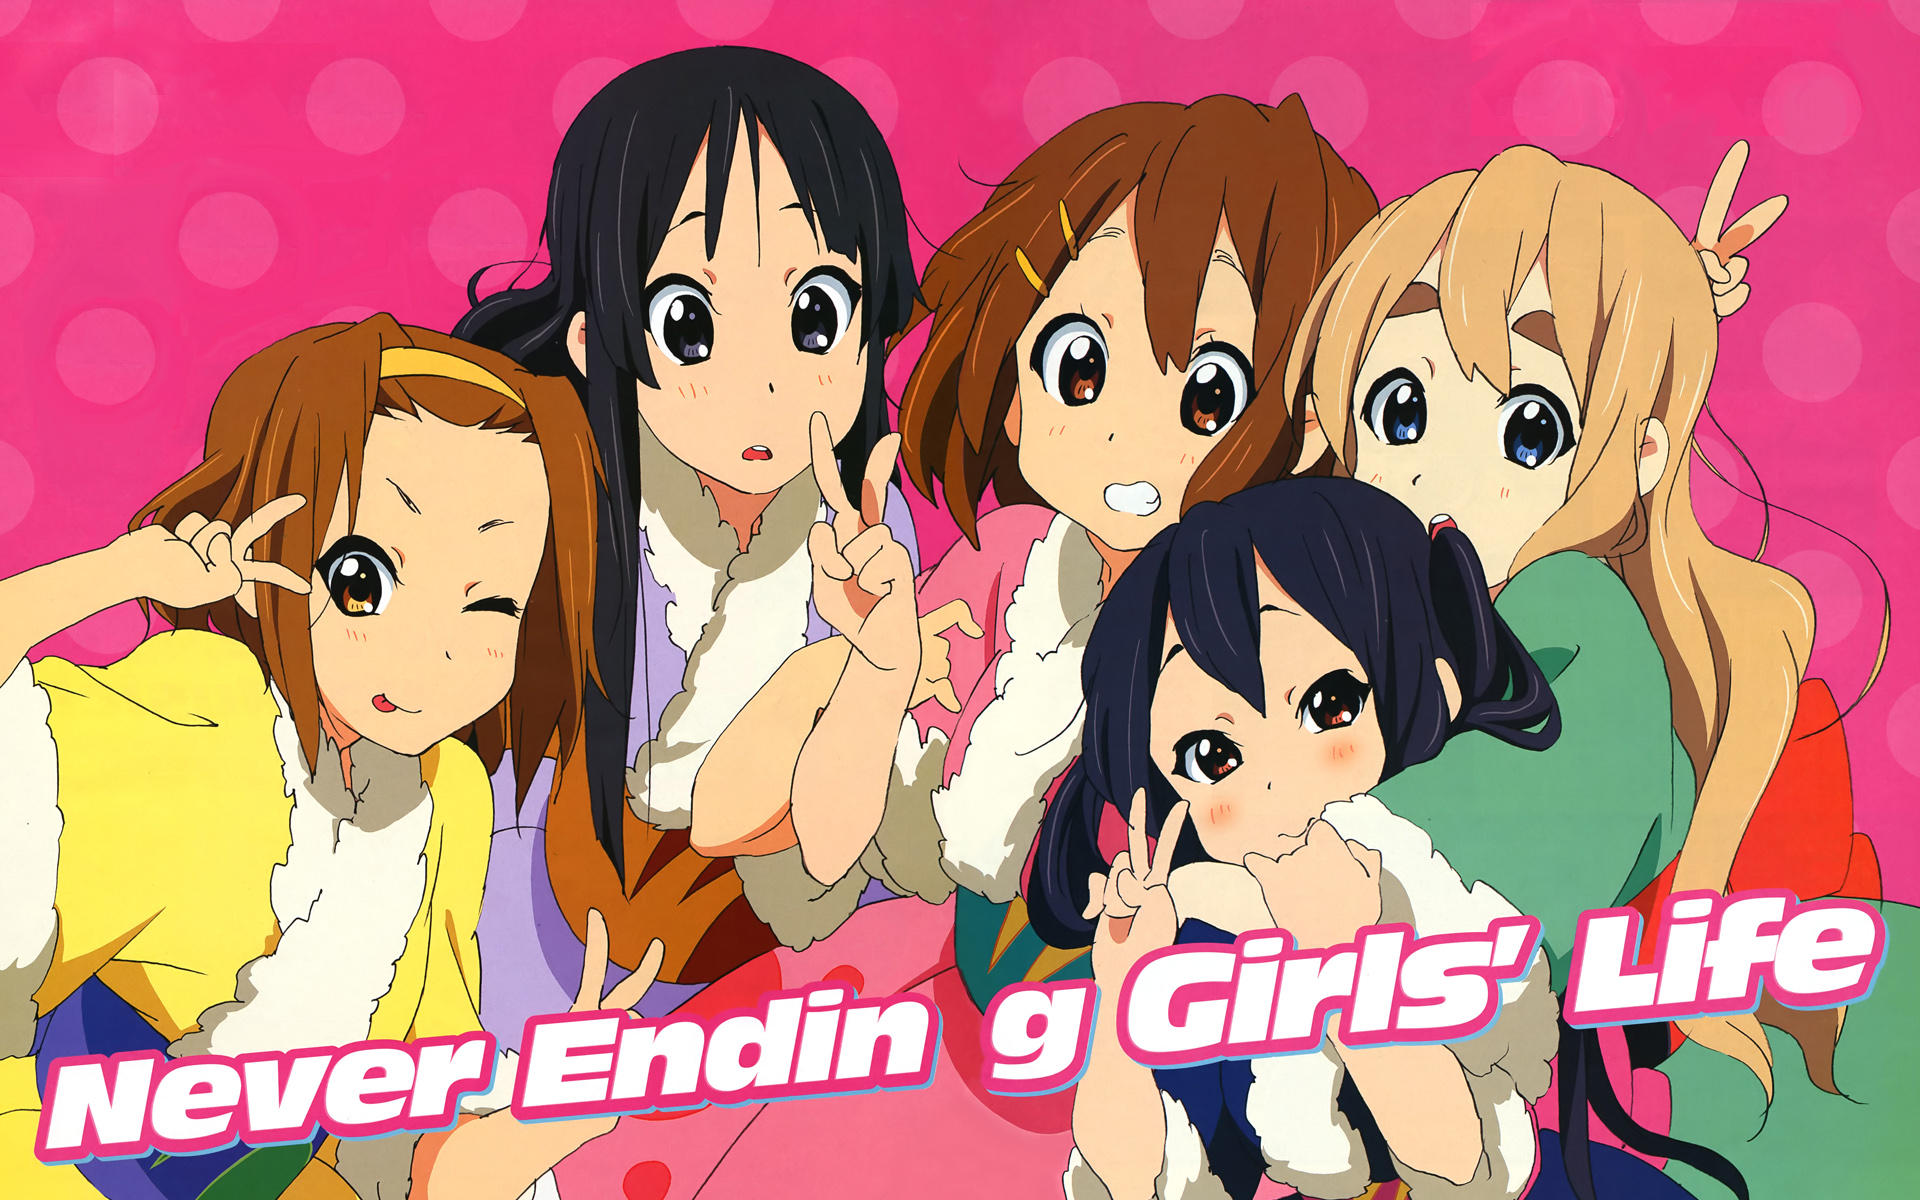 5 Anime Friends Girls HD wallpaper